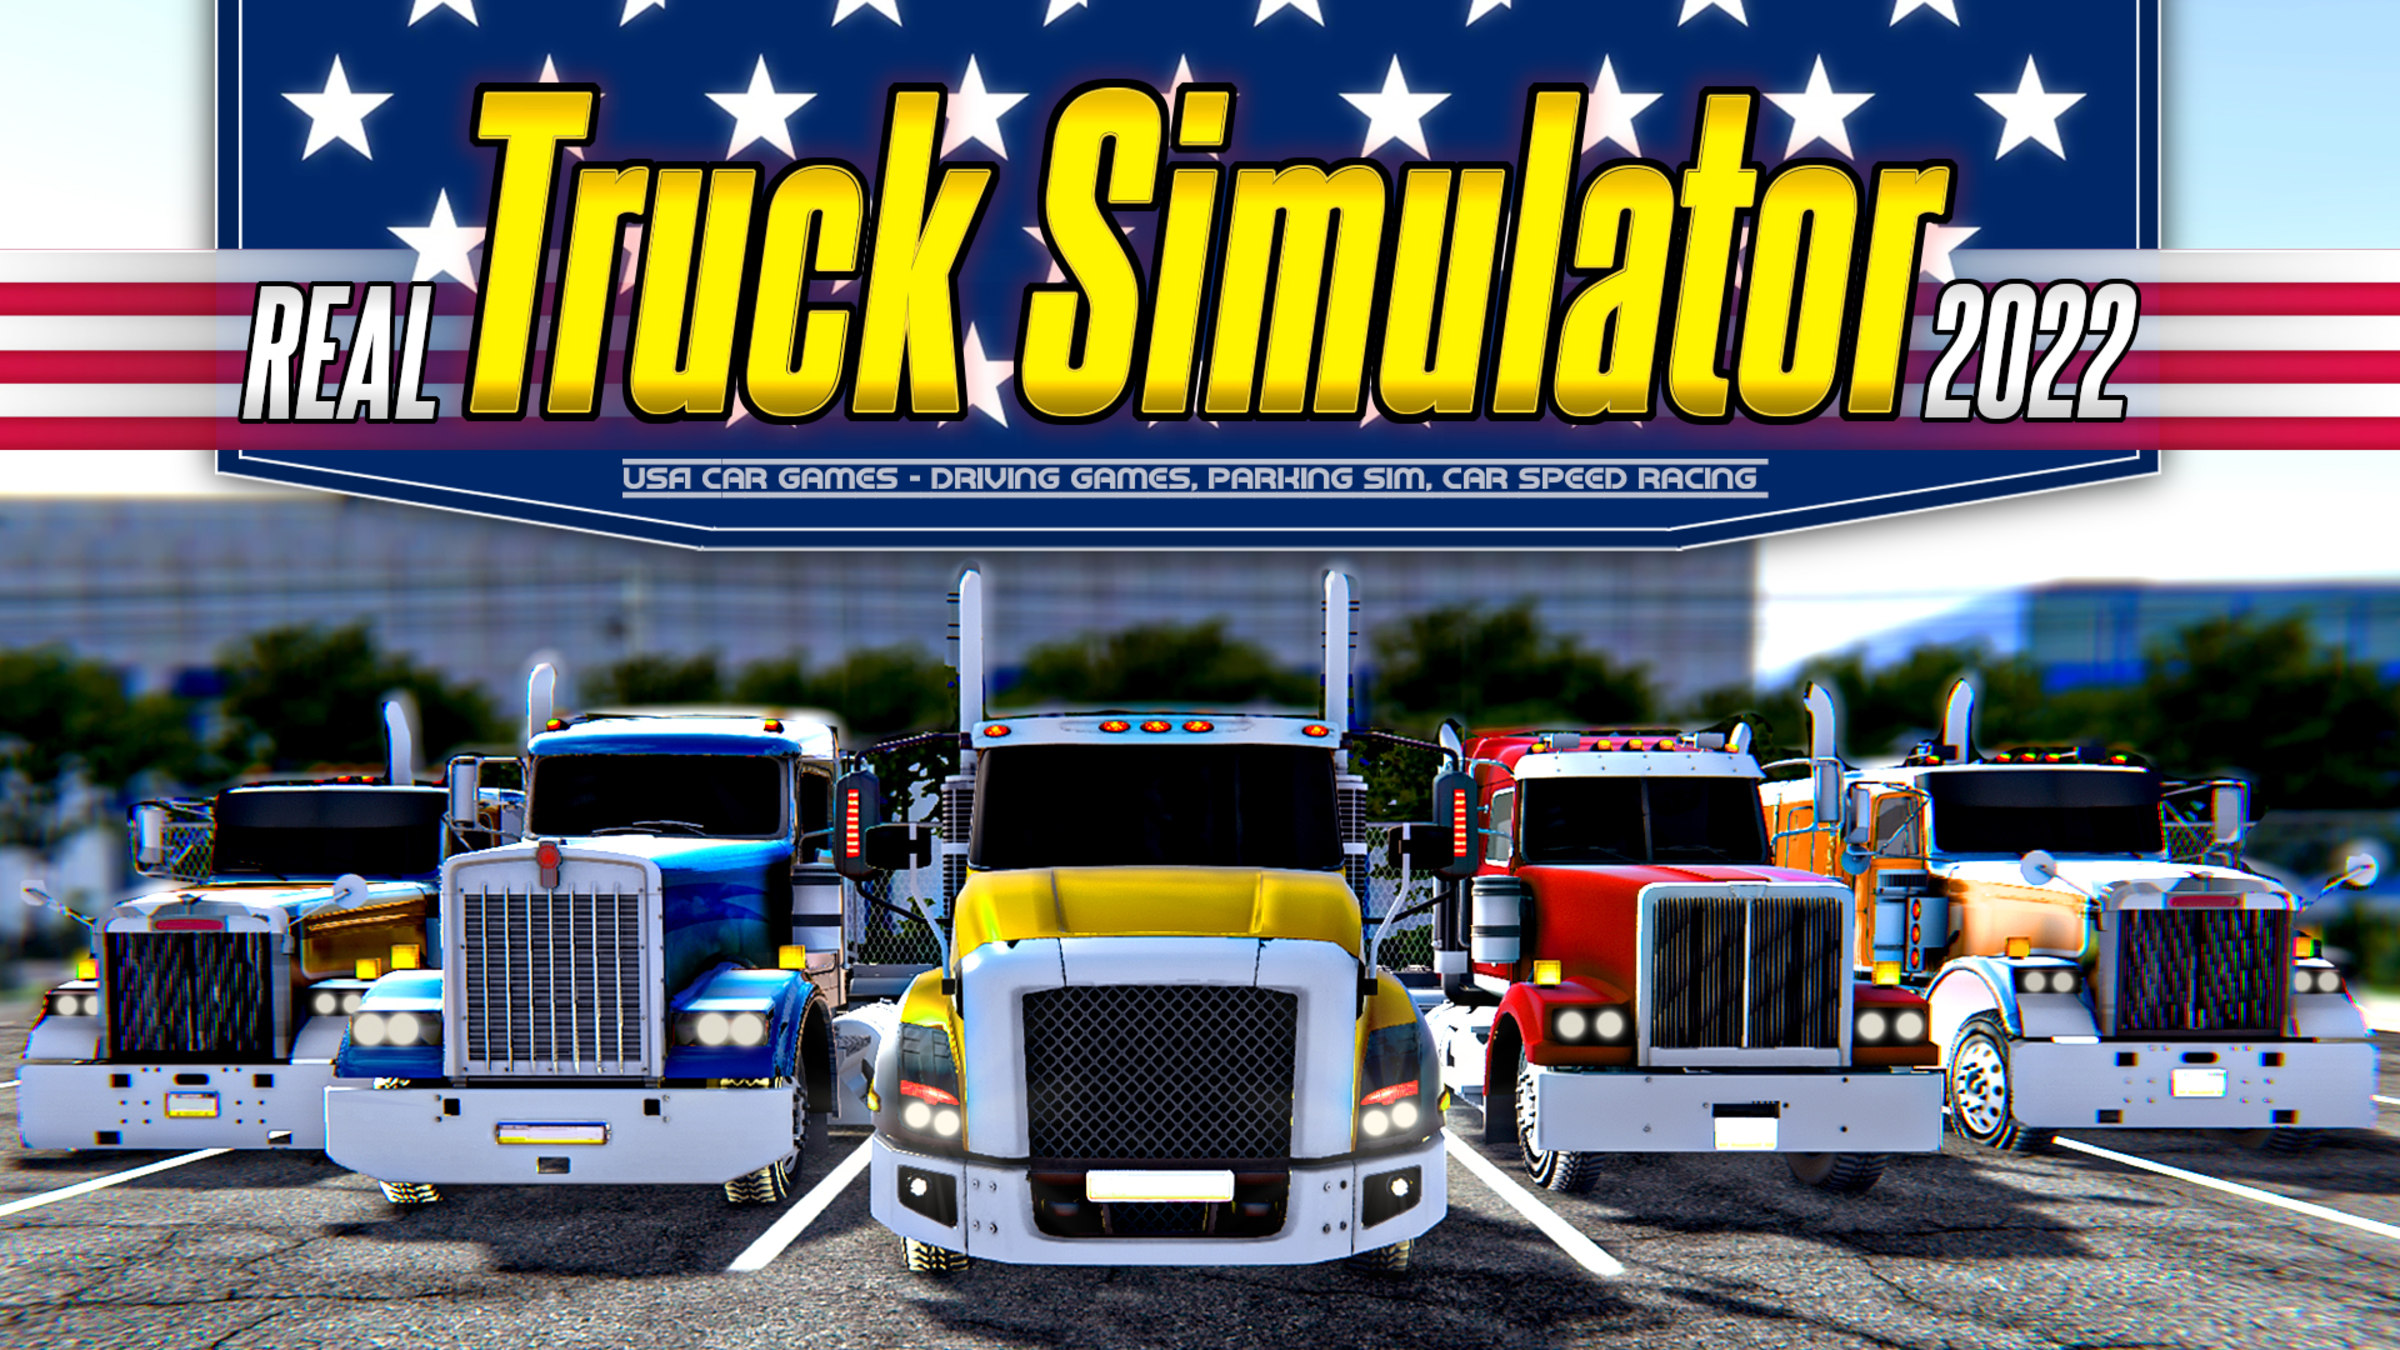 Real Truck Simulator USA Car Games Driving Games, Parking Sim, Car